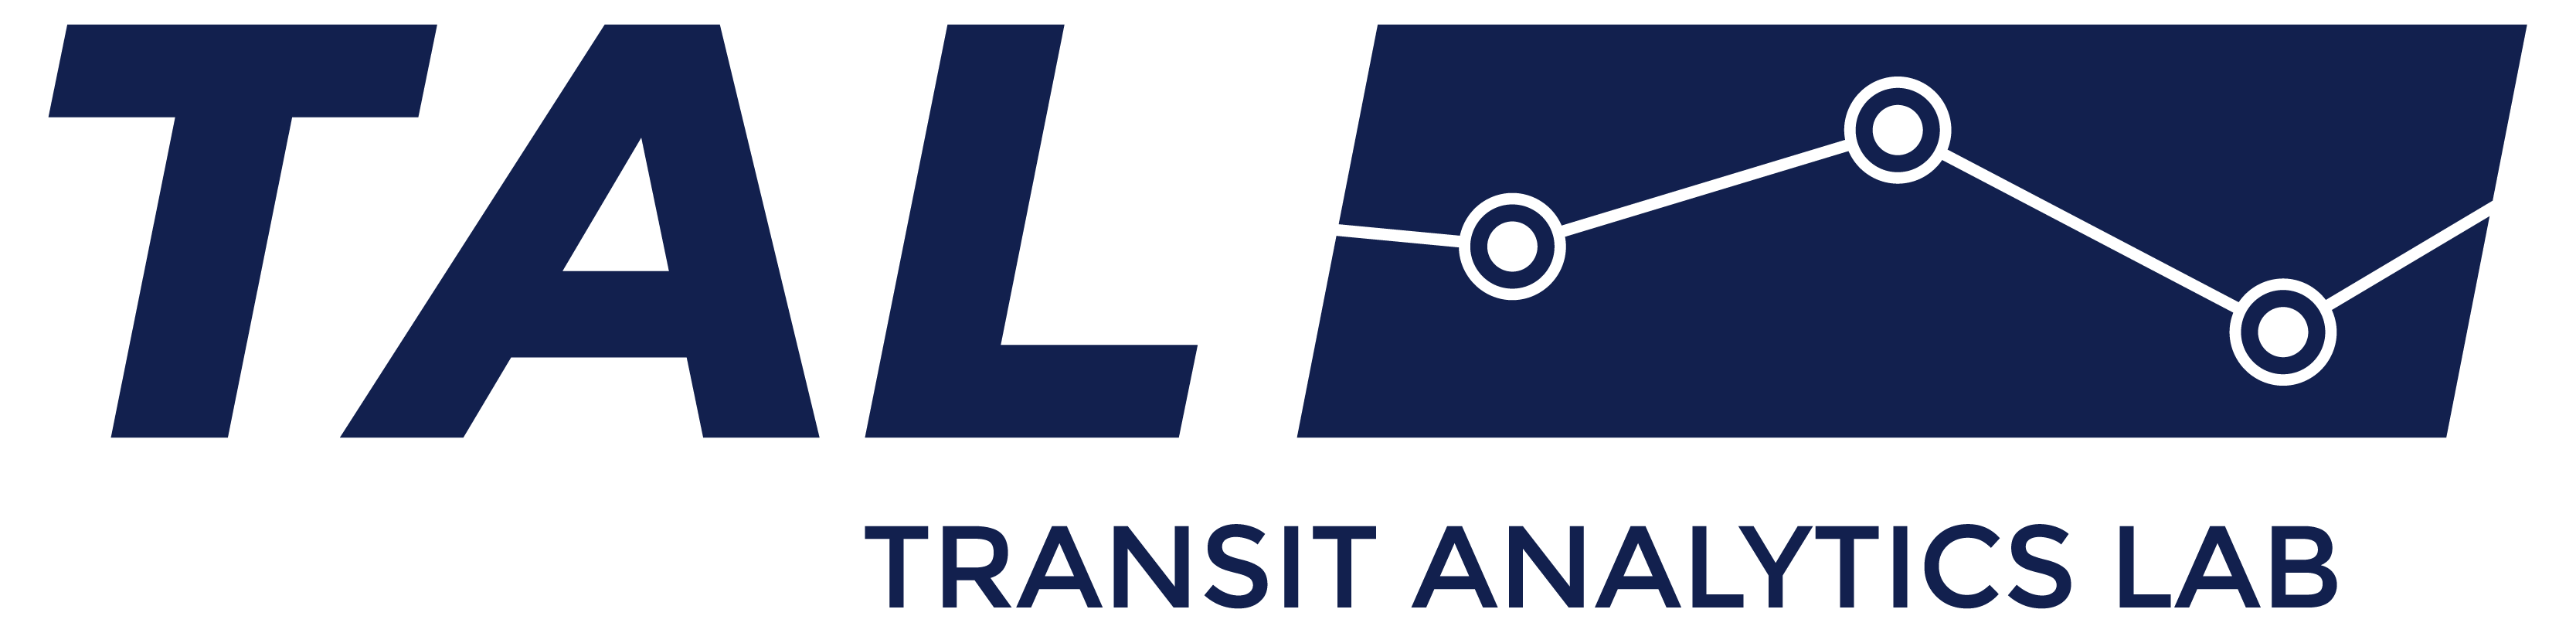 Transit Analytics Lab logo and wordmark